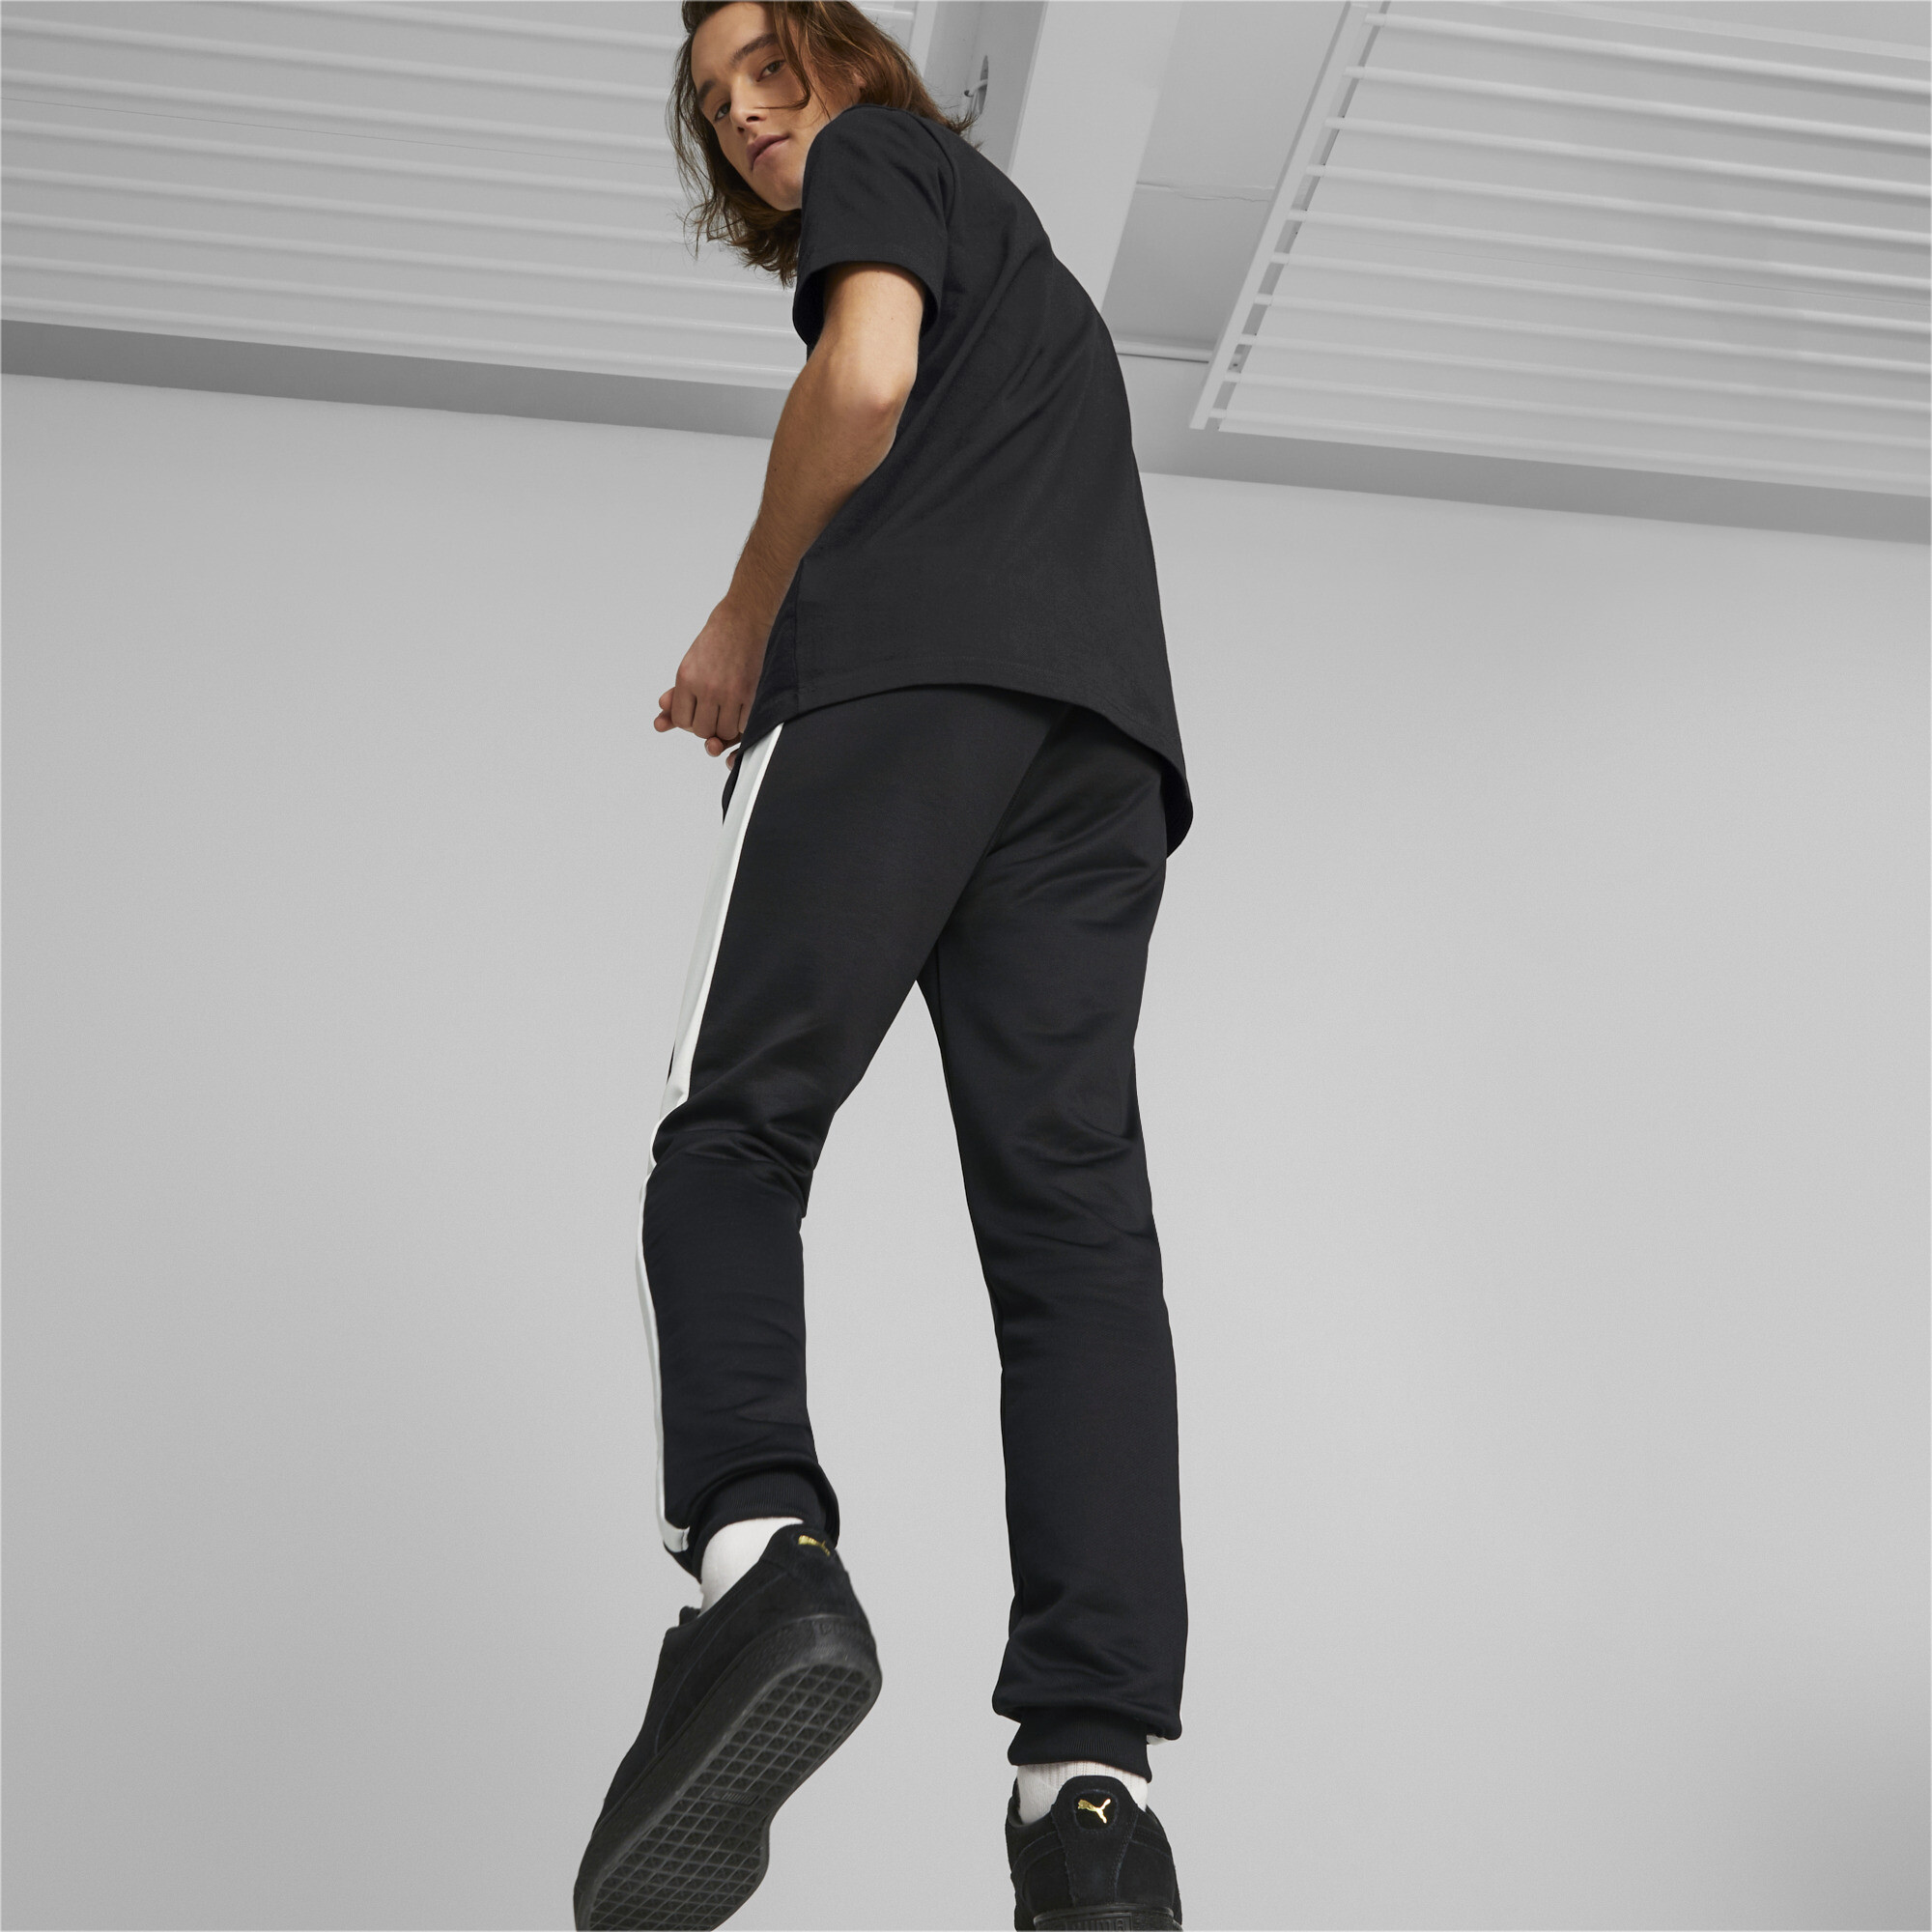 Men's Puma Iconic T7's Track Pants, Black, Size L, Clothing